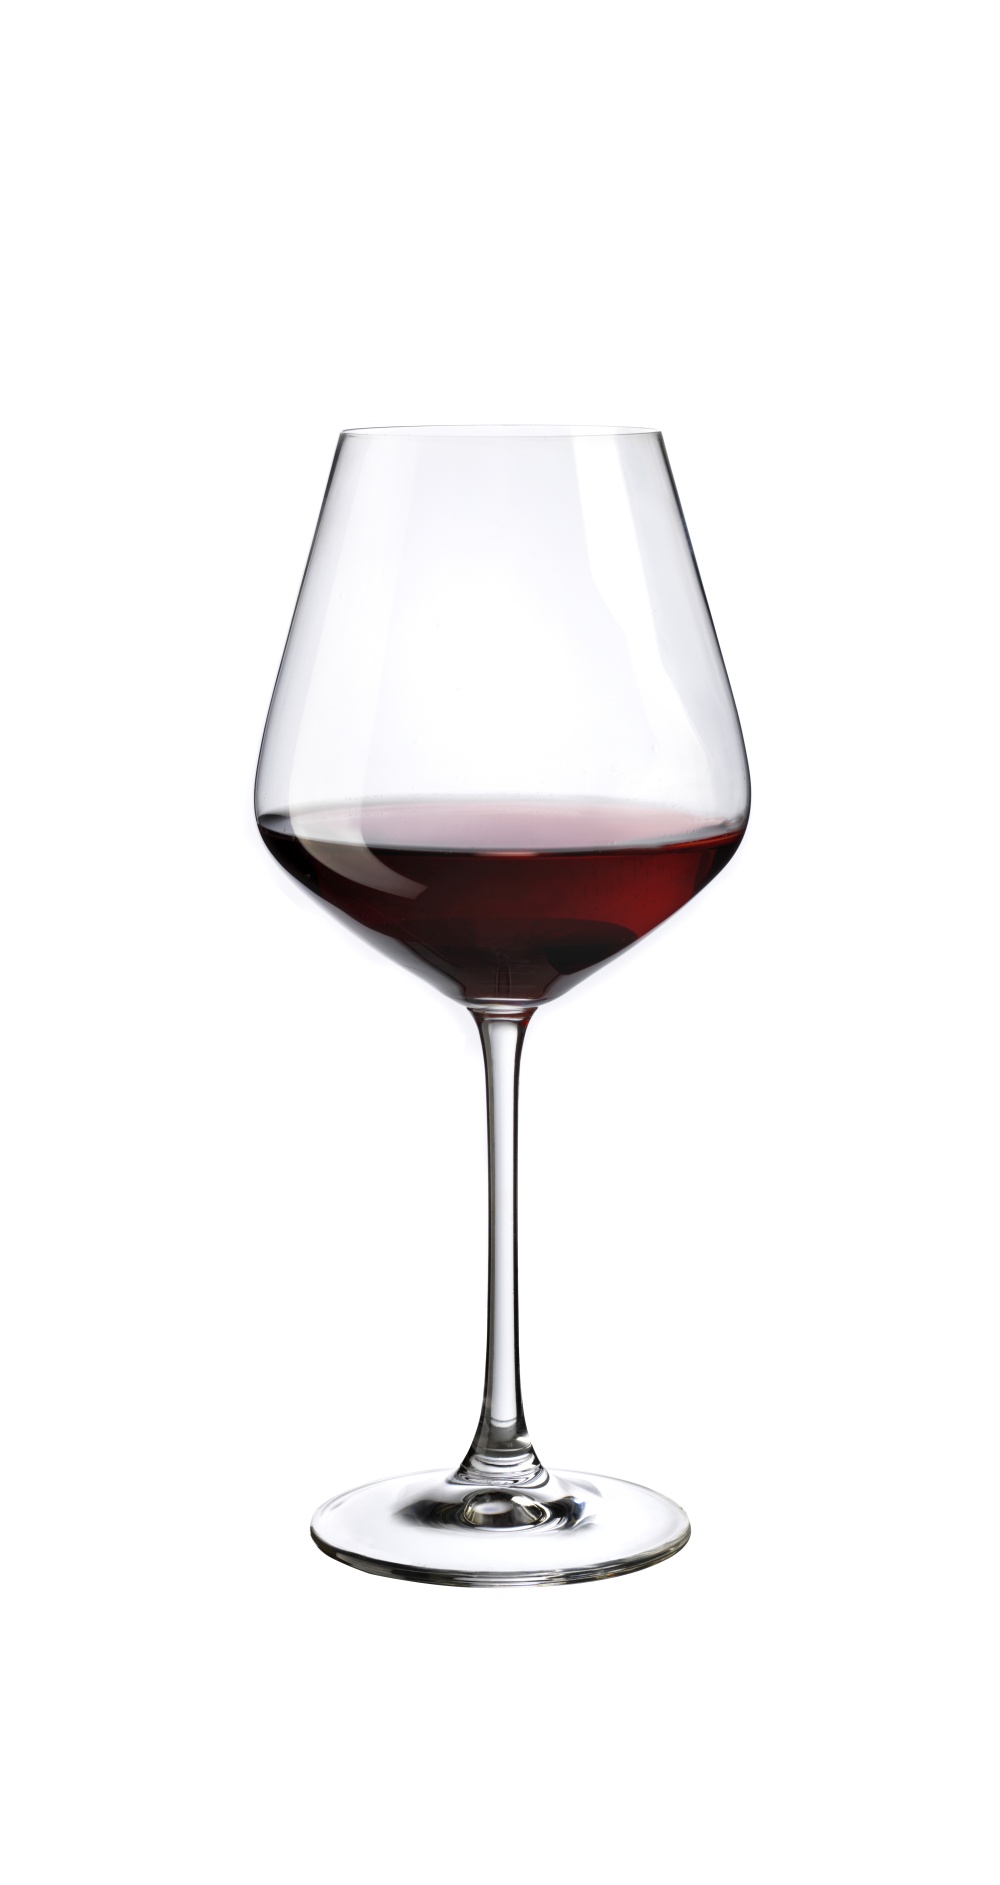 4er Gläser-Set Rotwein Weinaccessoires Le Creuset